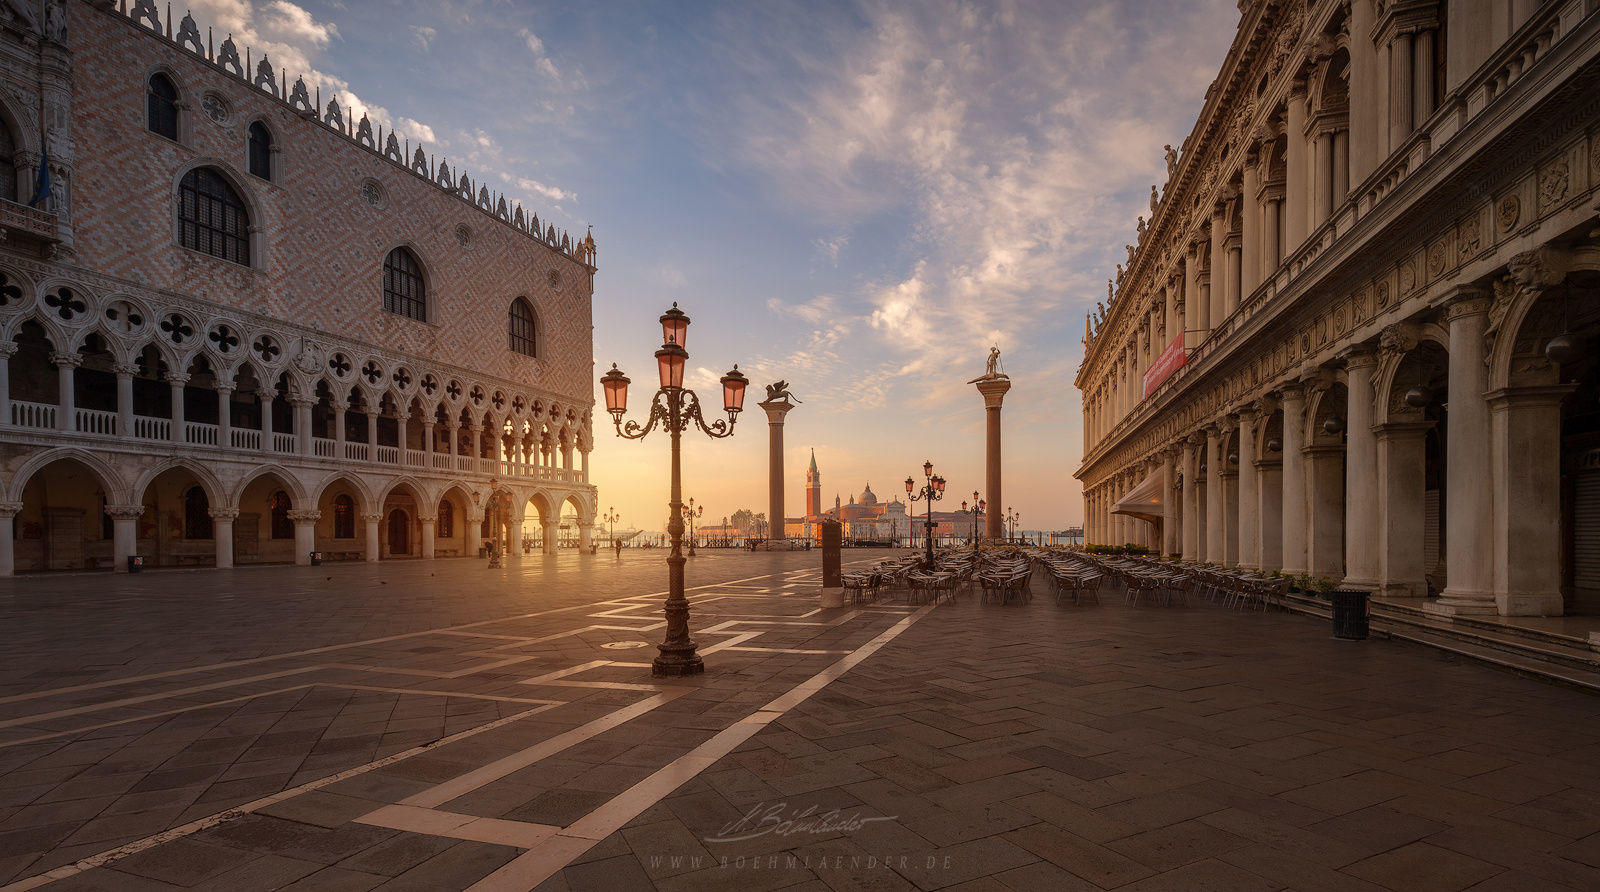 Silent Venice - Piazza san Marco